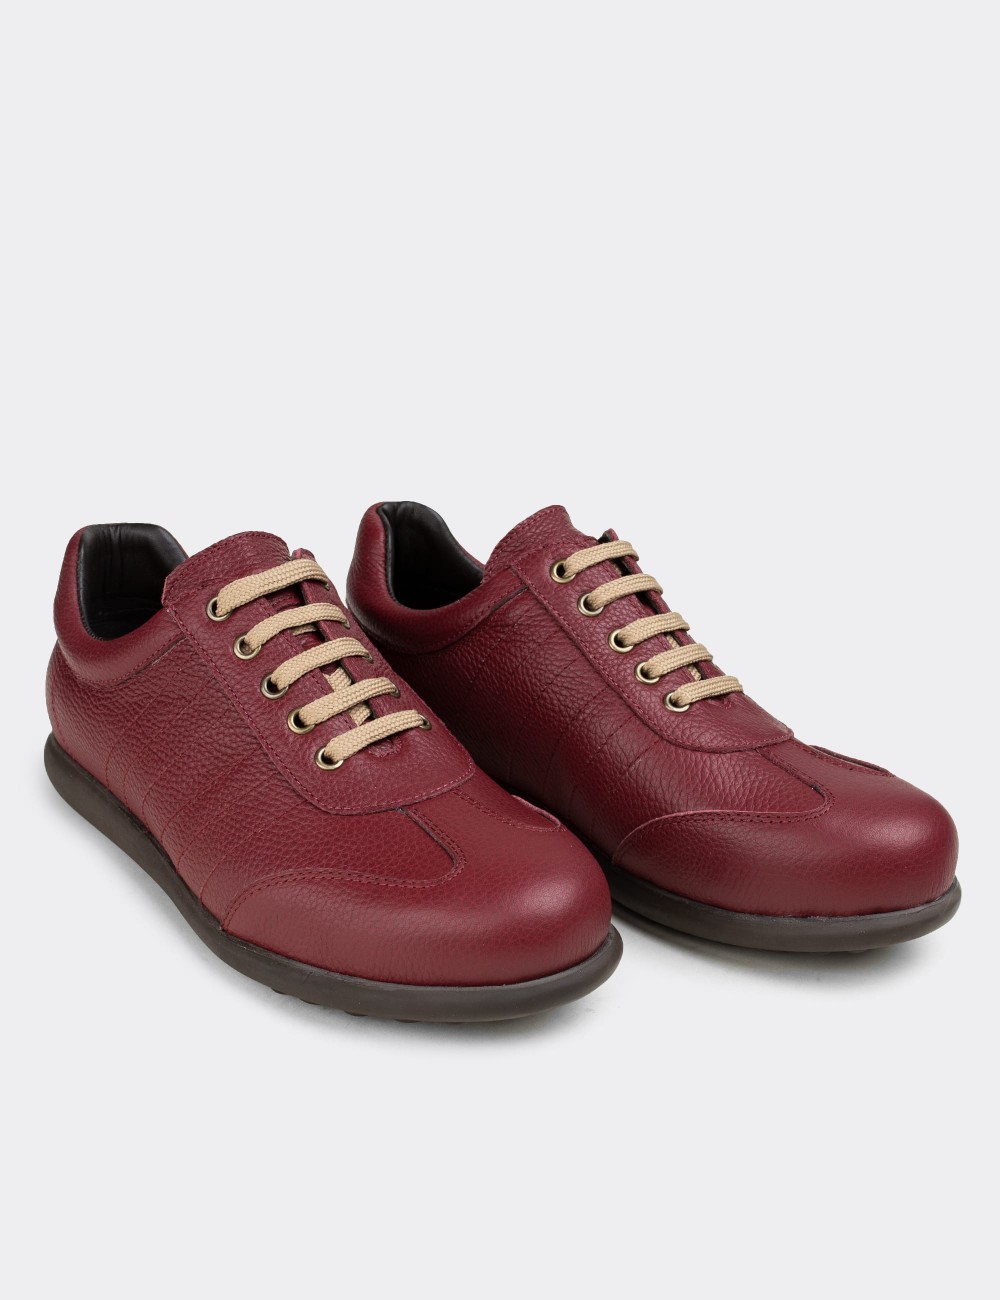 Burgundy Nubuck Leather Lace-up Shoes - 01826MBRDC03